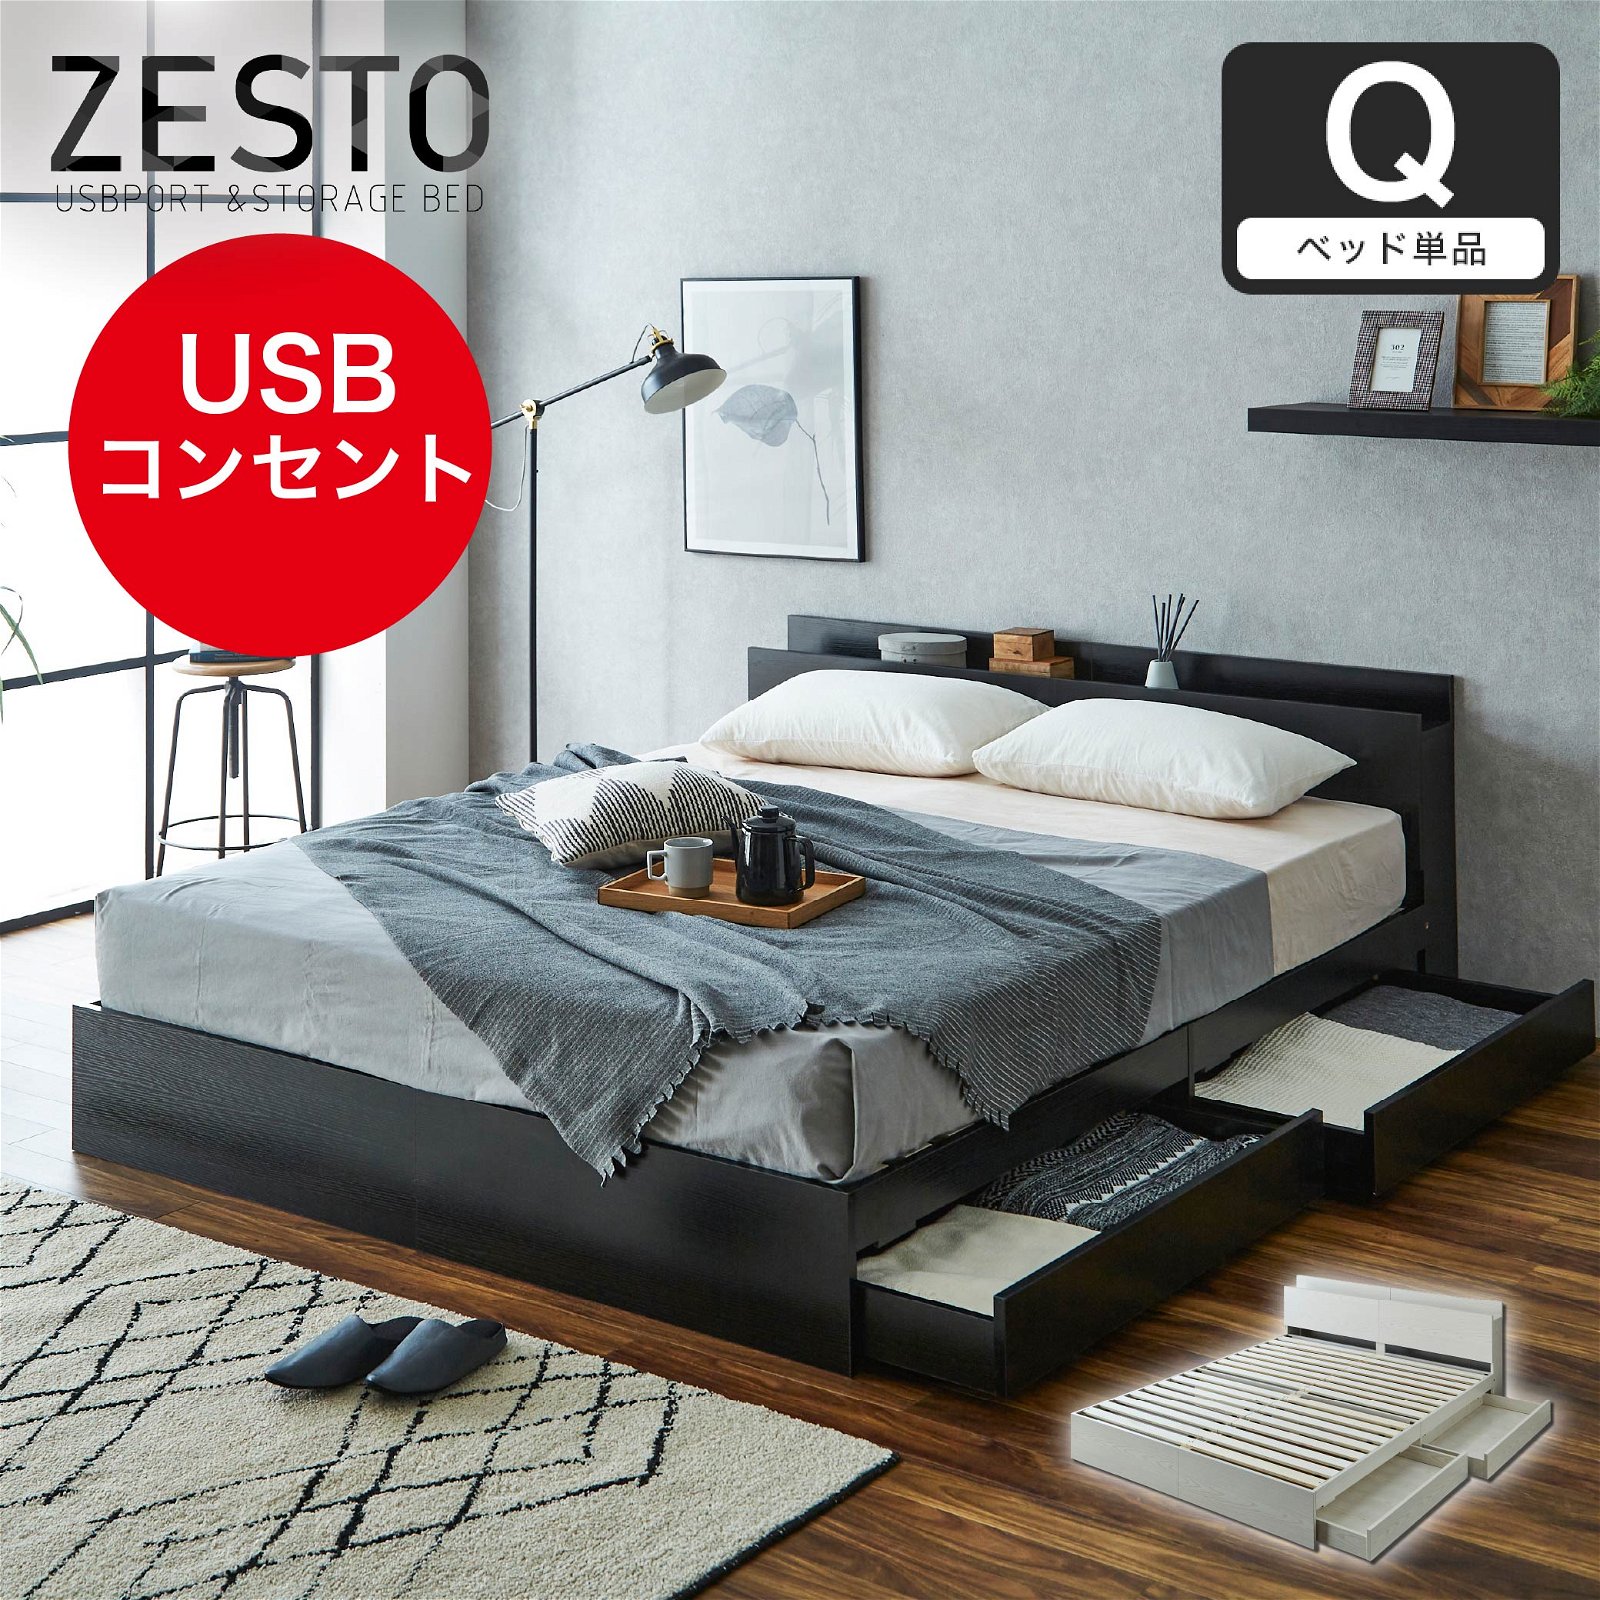 zesto ゼスト 棚・USBコンセント・引き出し付きベッド zesto ゼスト